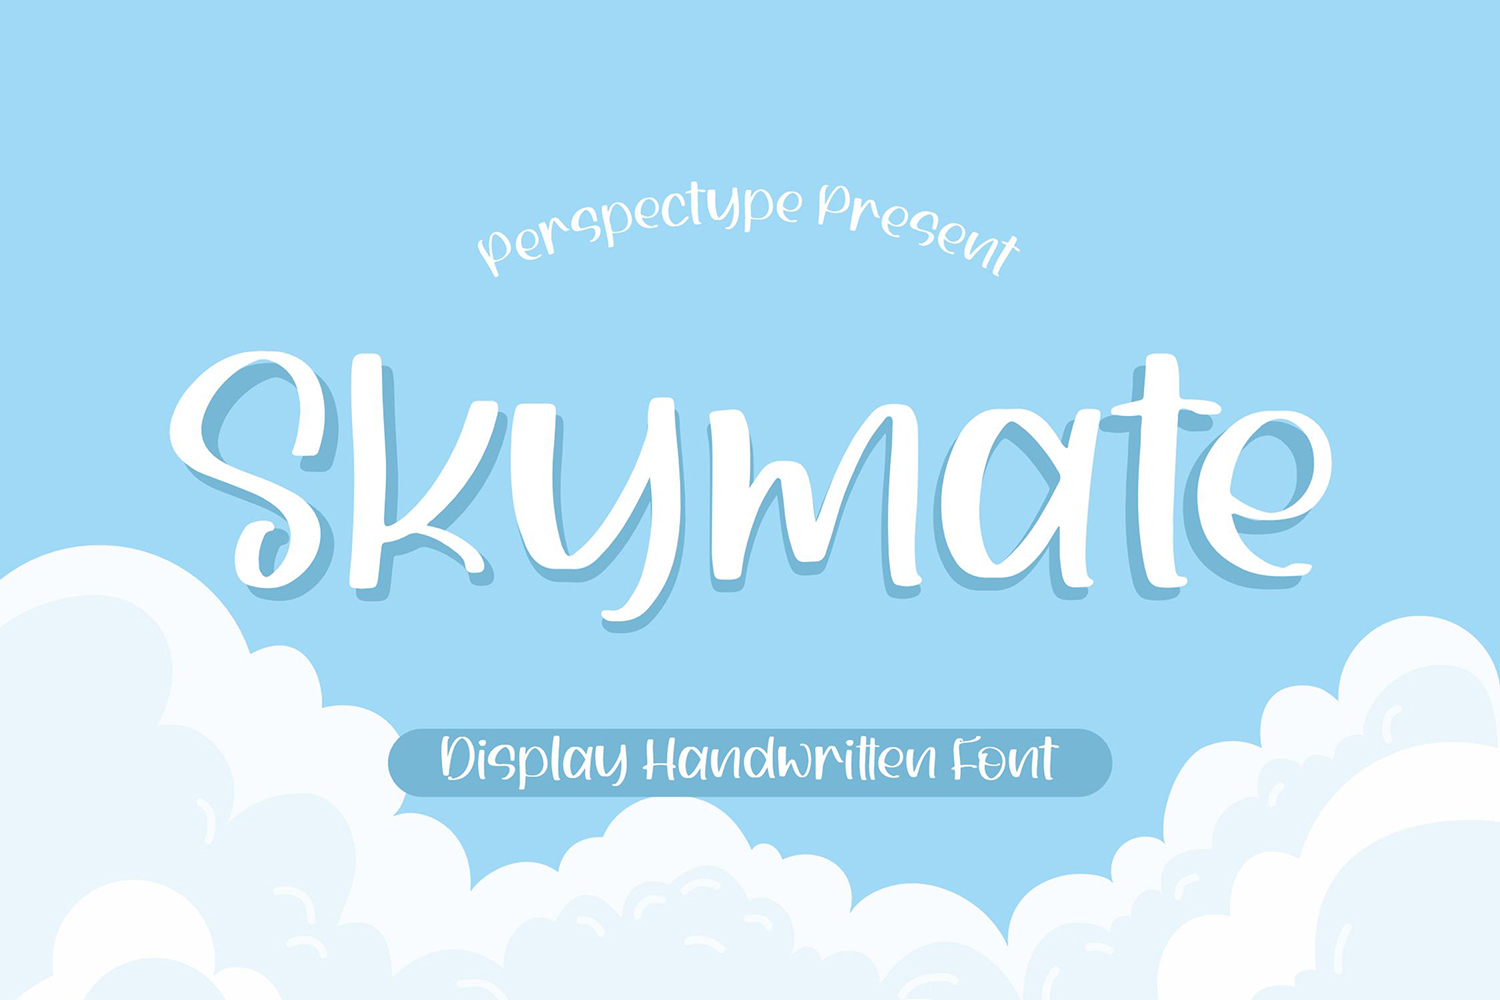 Skymate Free Font